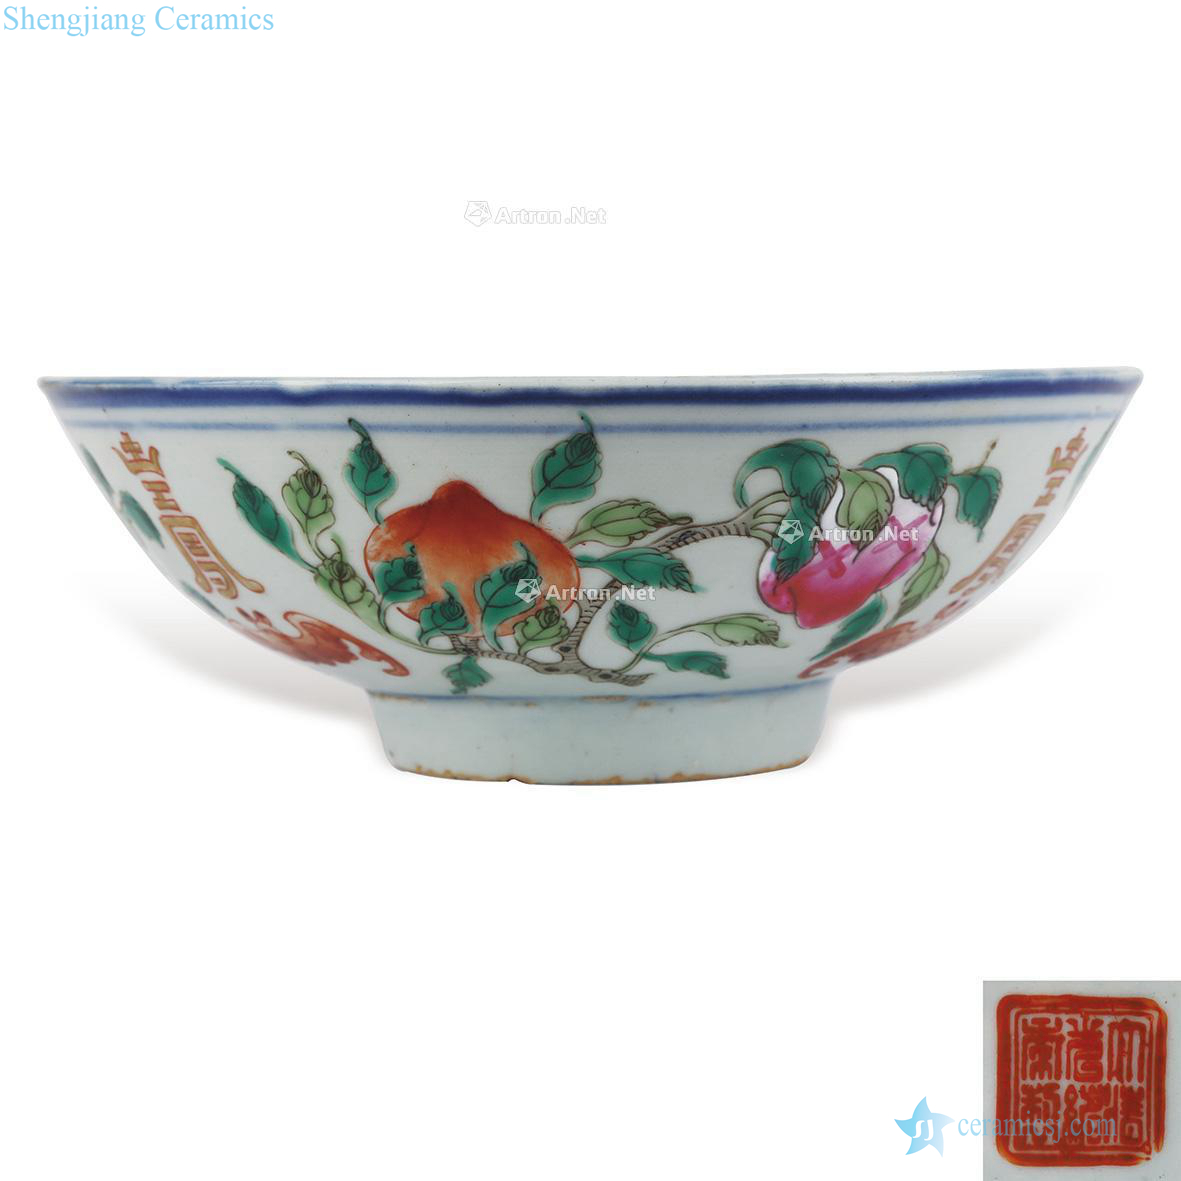 Pastel reign of qing emperor guangxu sanduo green-splashed bowls